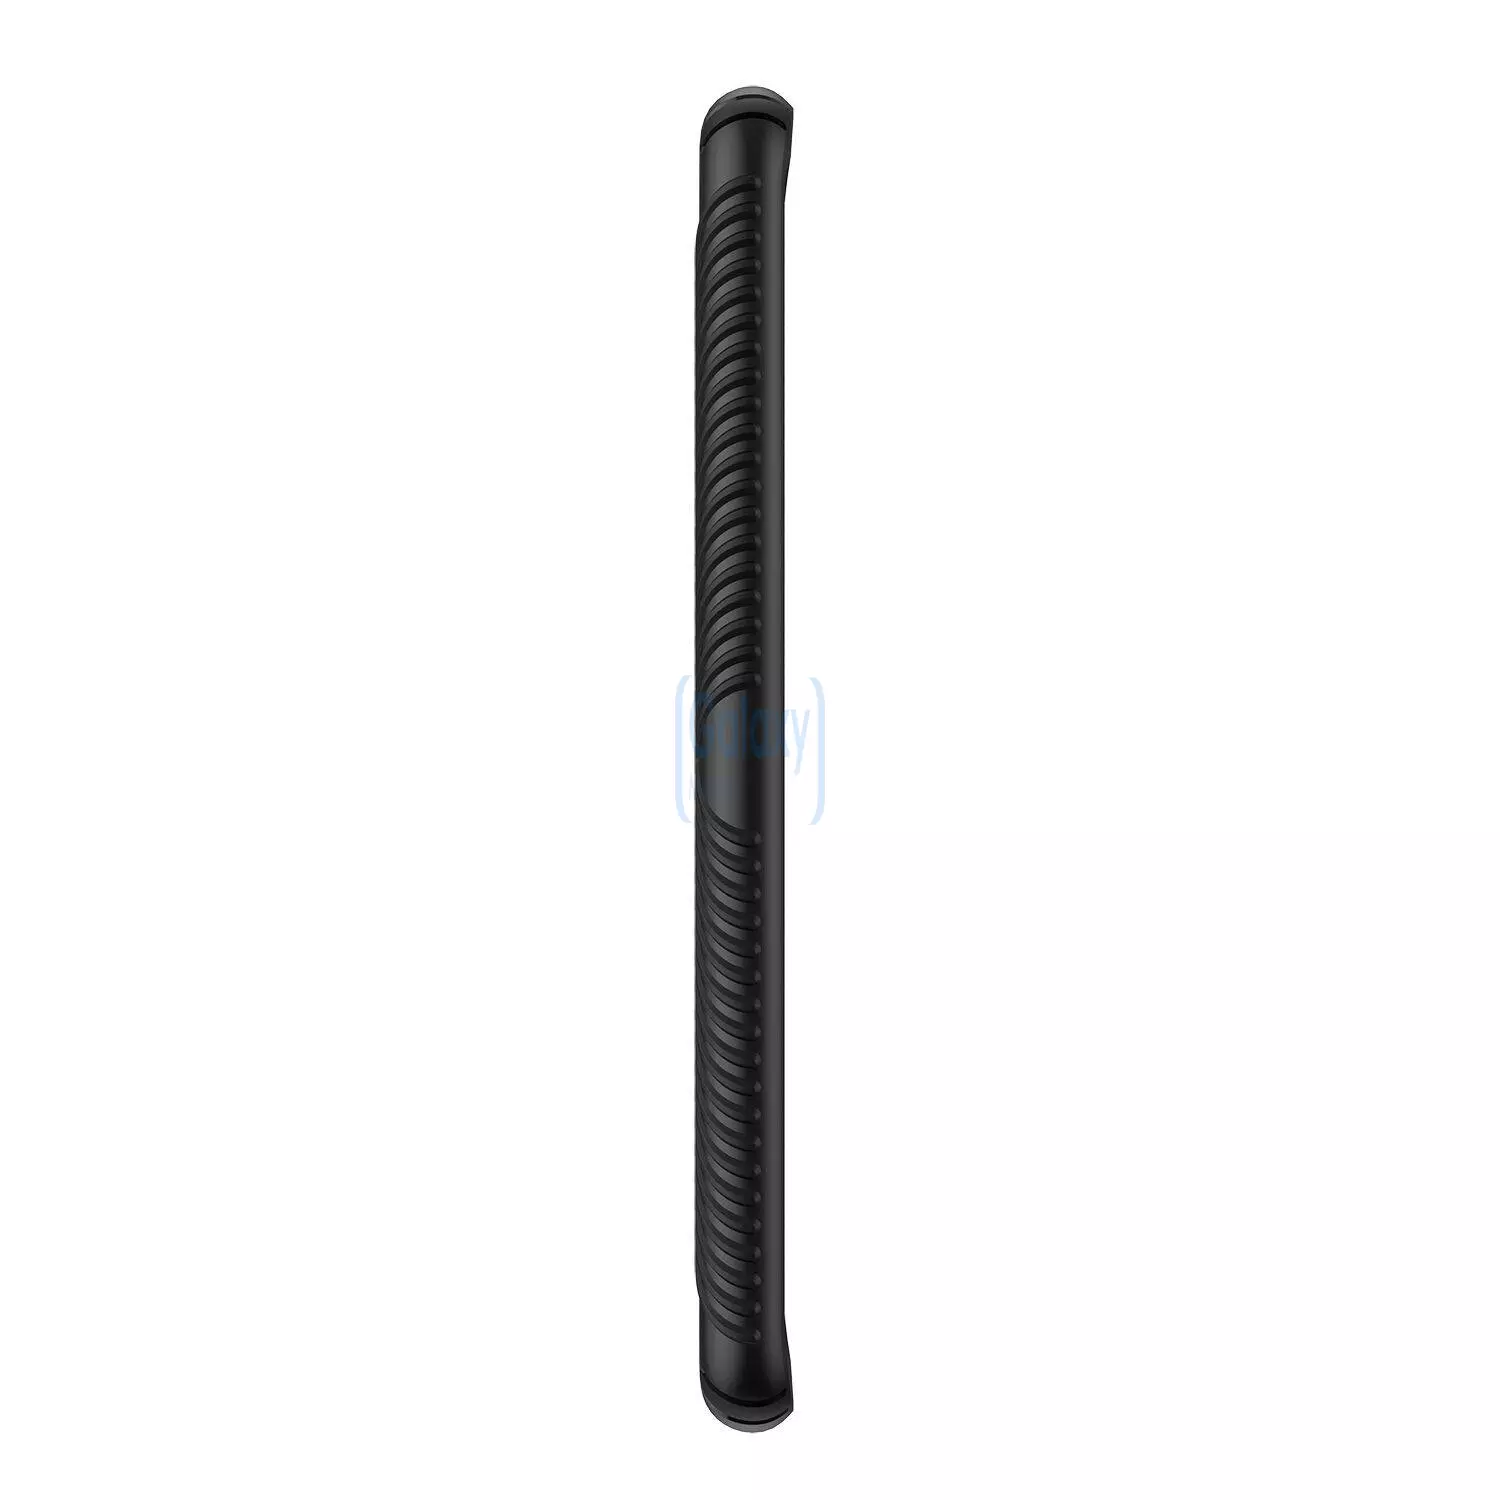 Чехол бампер Speck Presidio Grip Case для Samsung Galaxy S20 Plus Black/Black (Черный/Черный)